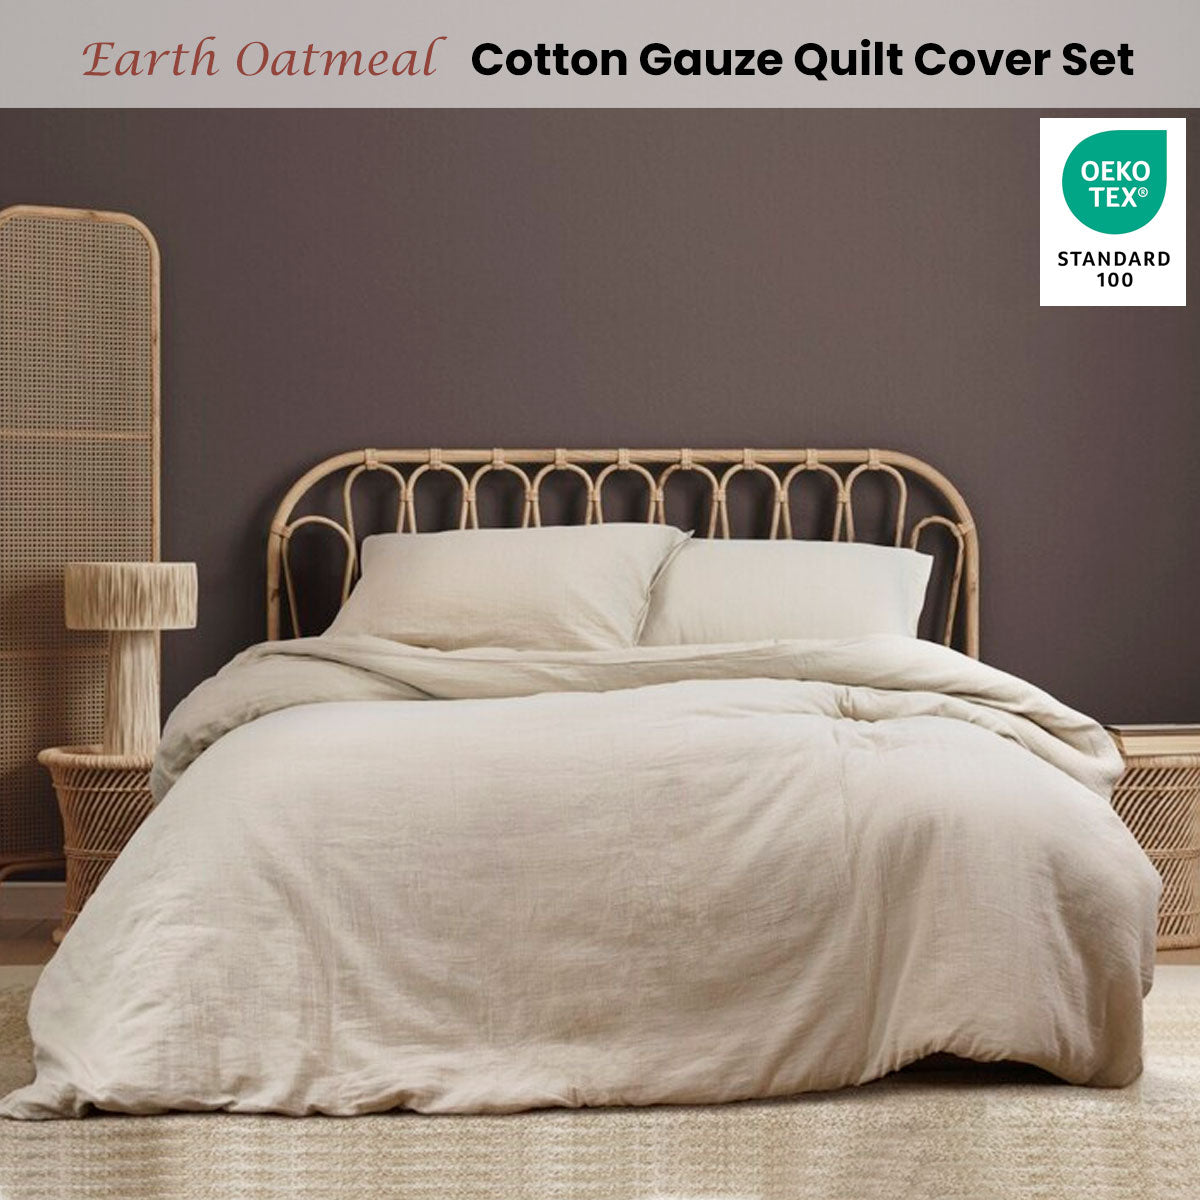 QUEEN Cotton Gauze Quilt Cover Set - Beige